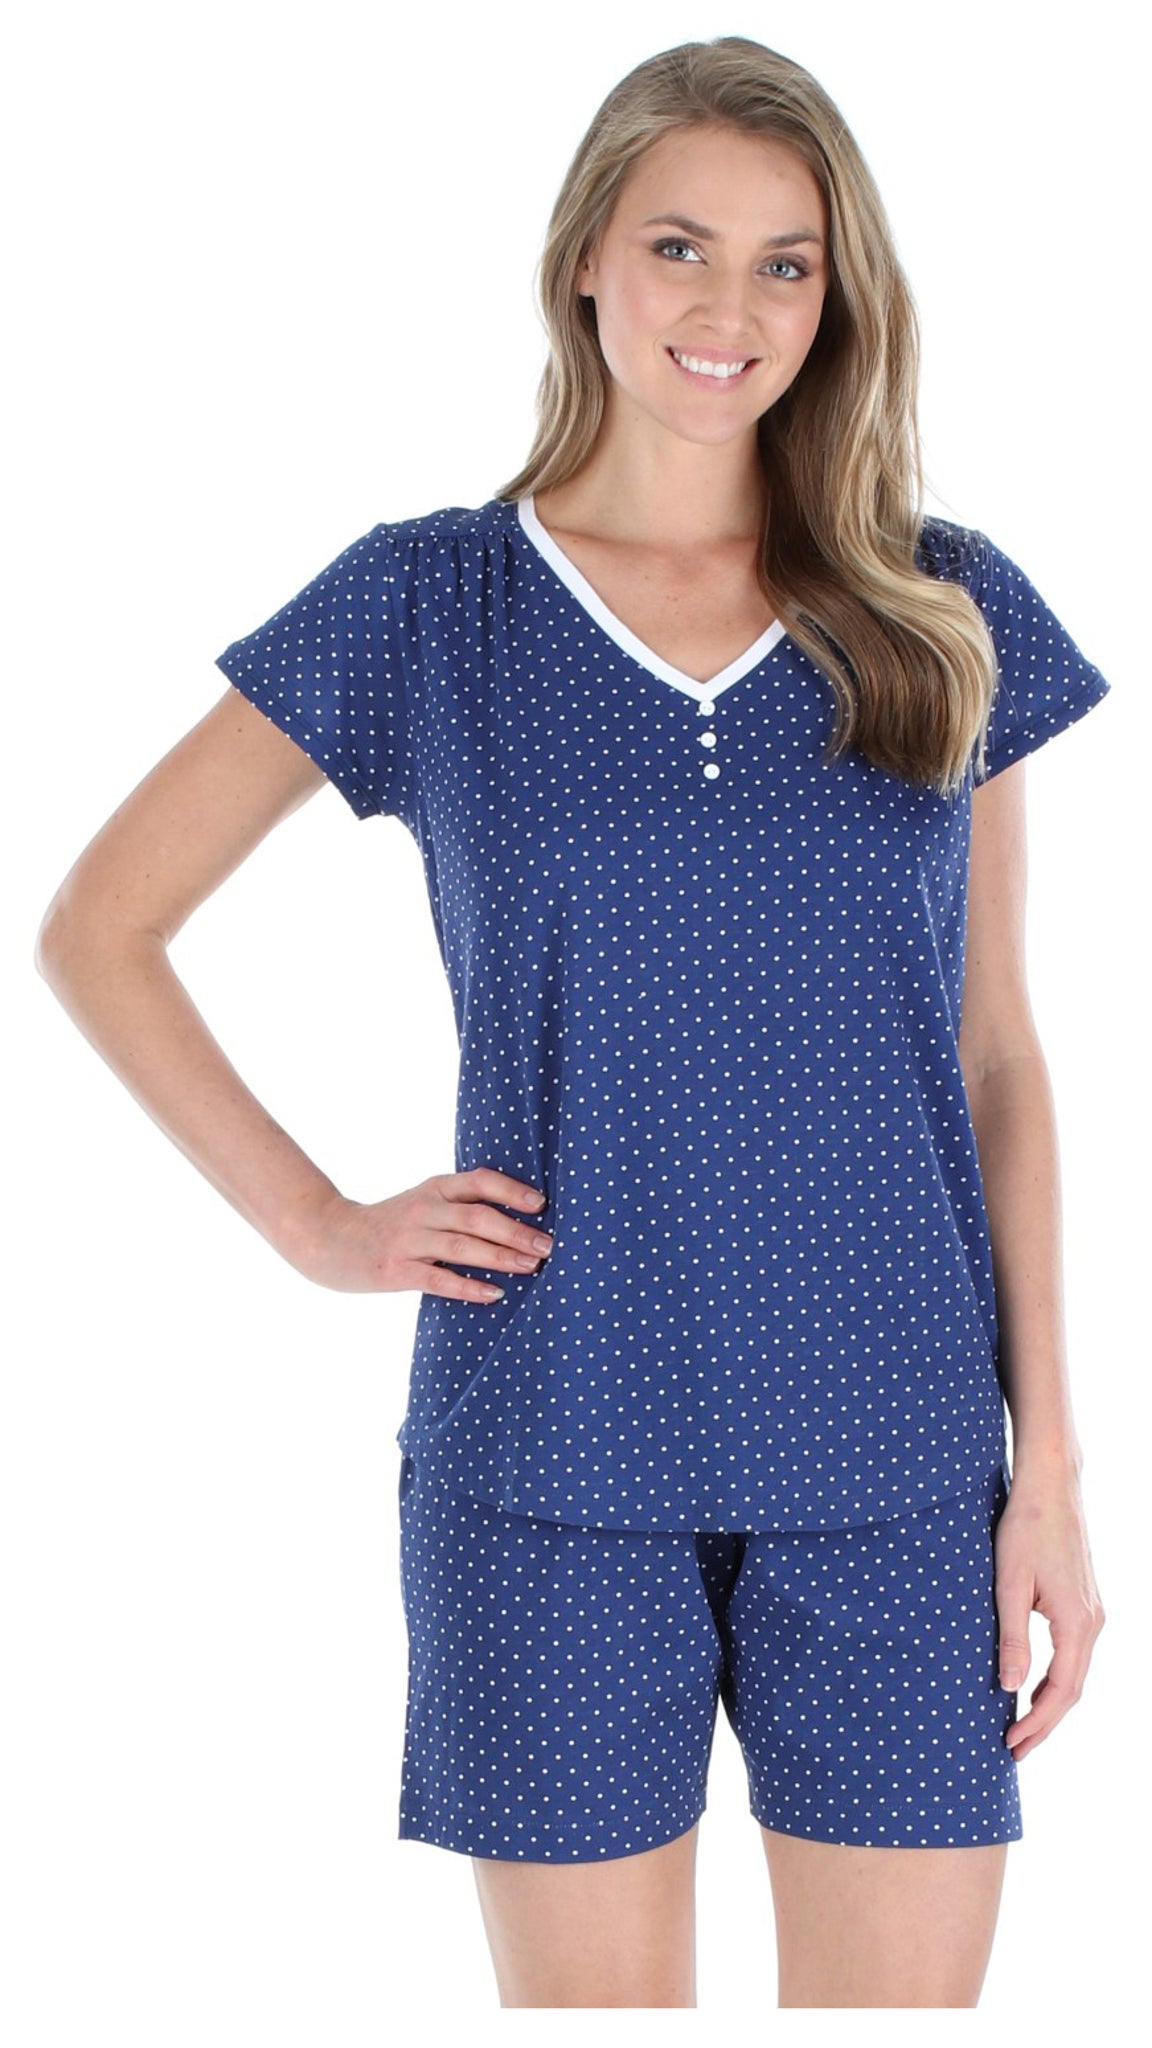 Women's Cotton Short Sleeve V-Neck Top and Shorts Pajama Set